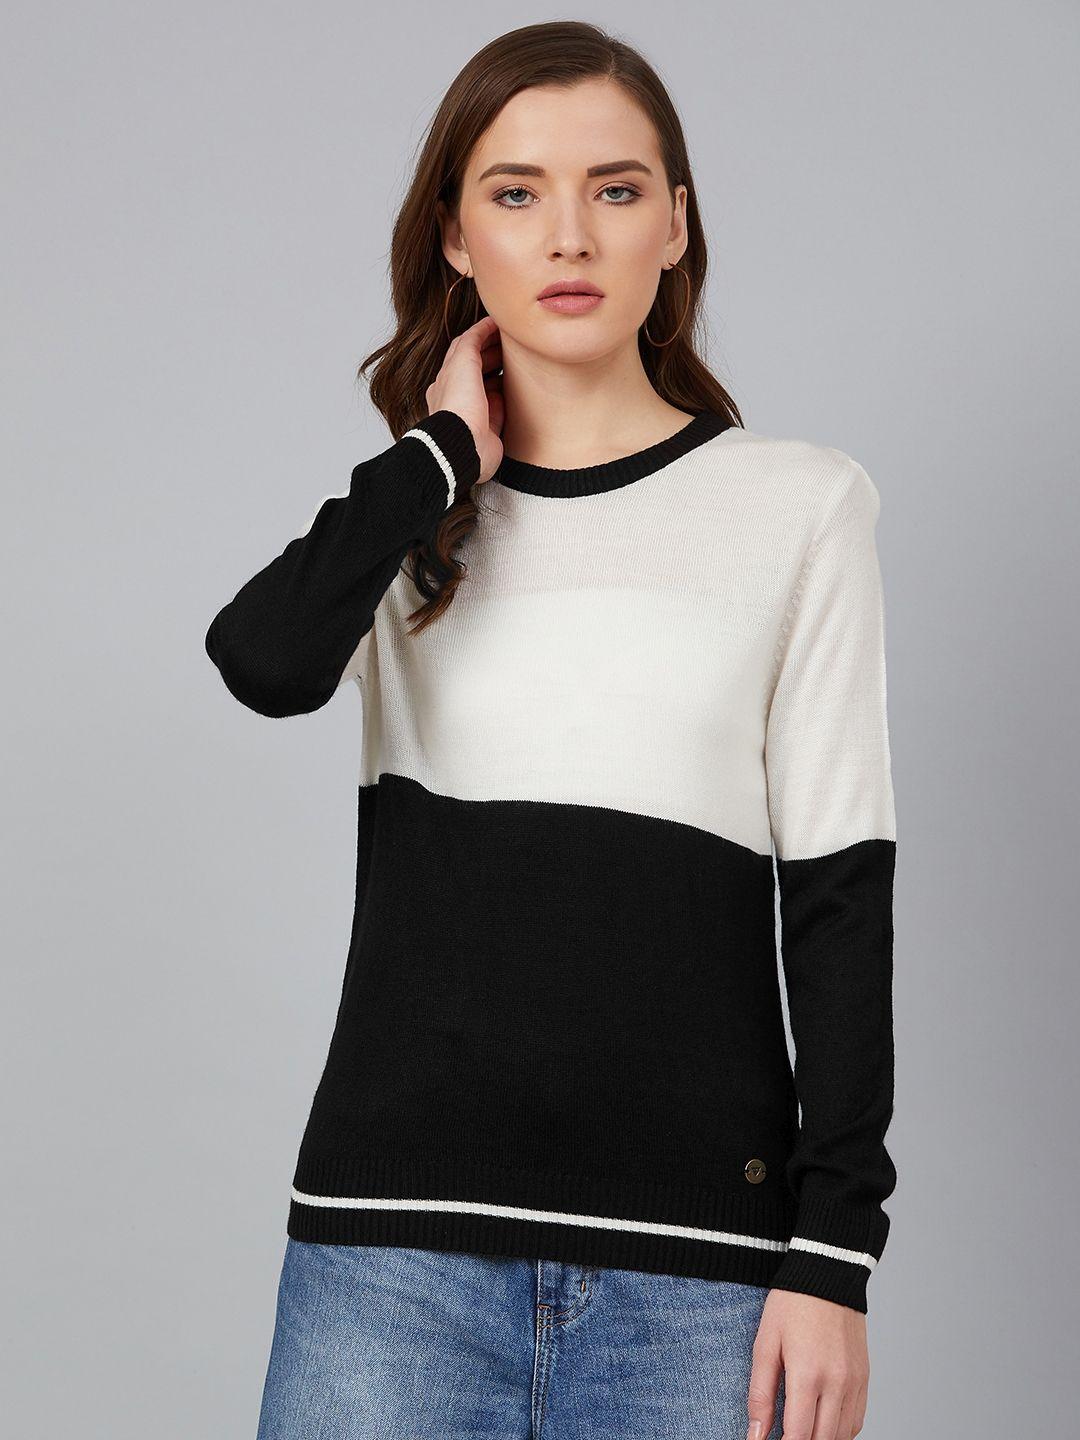 cayman-women-black-&-off-white-colourblocked-pullover-acrylic-sweater